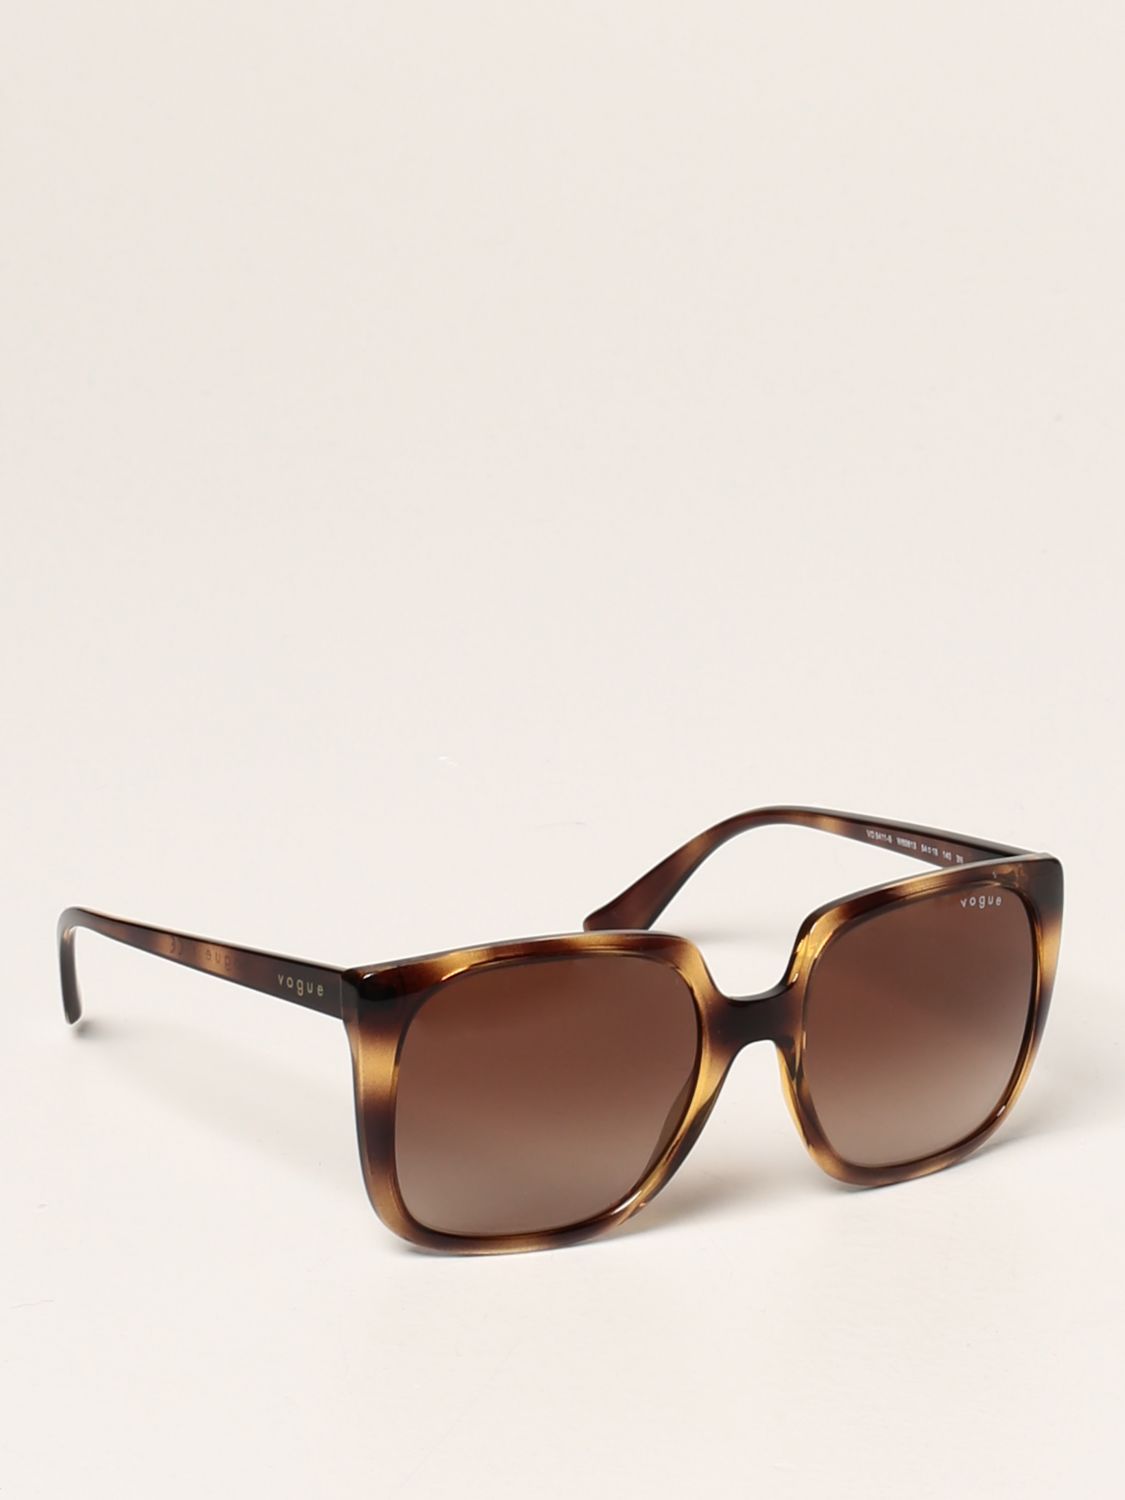 Vogue Vogue sunglasses in tortoiseshell acetate